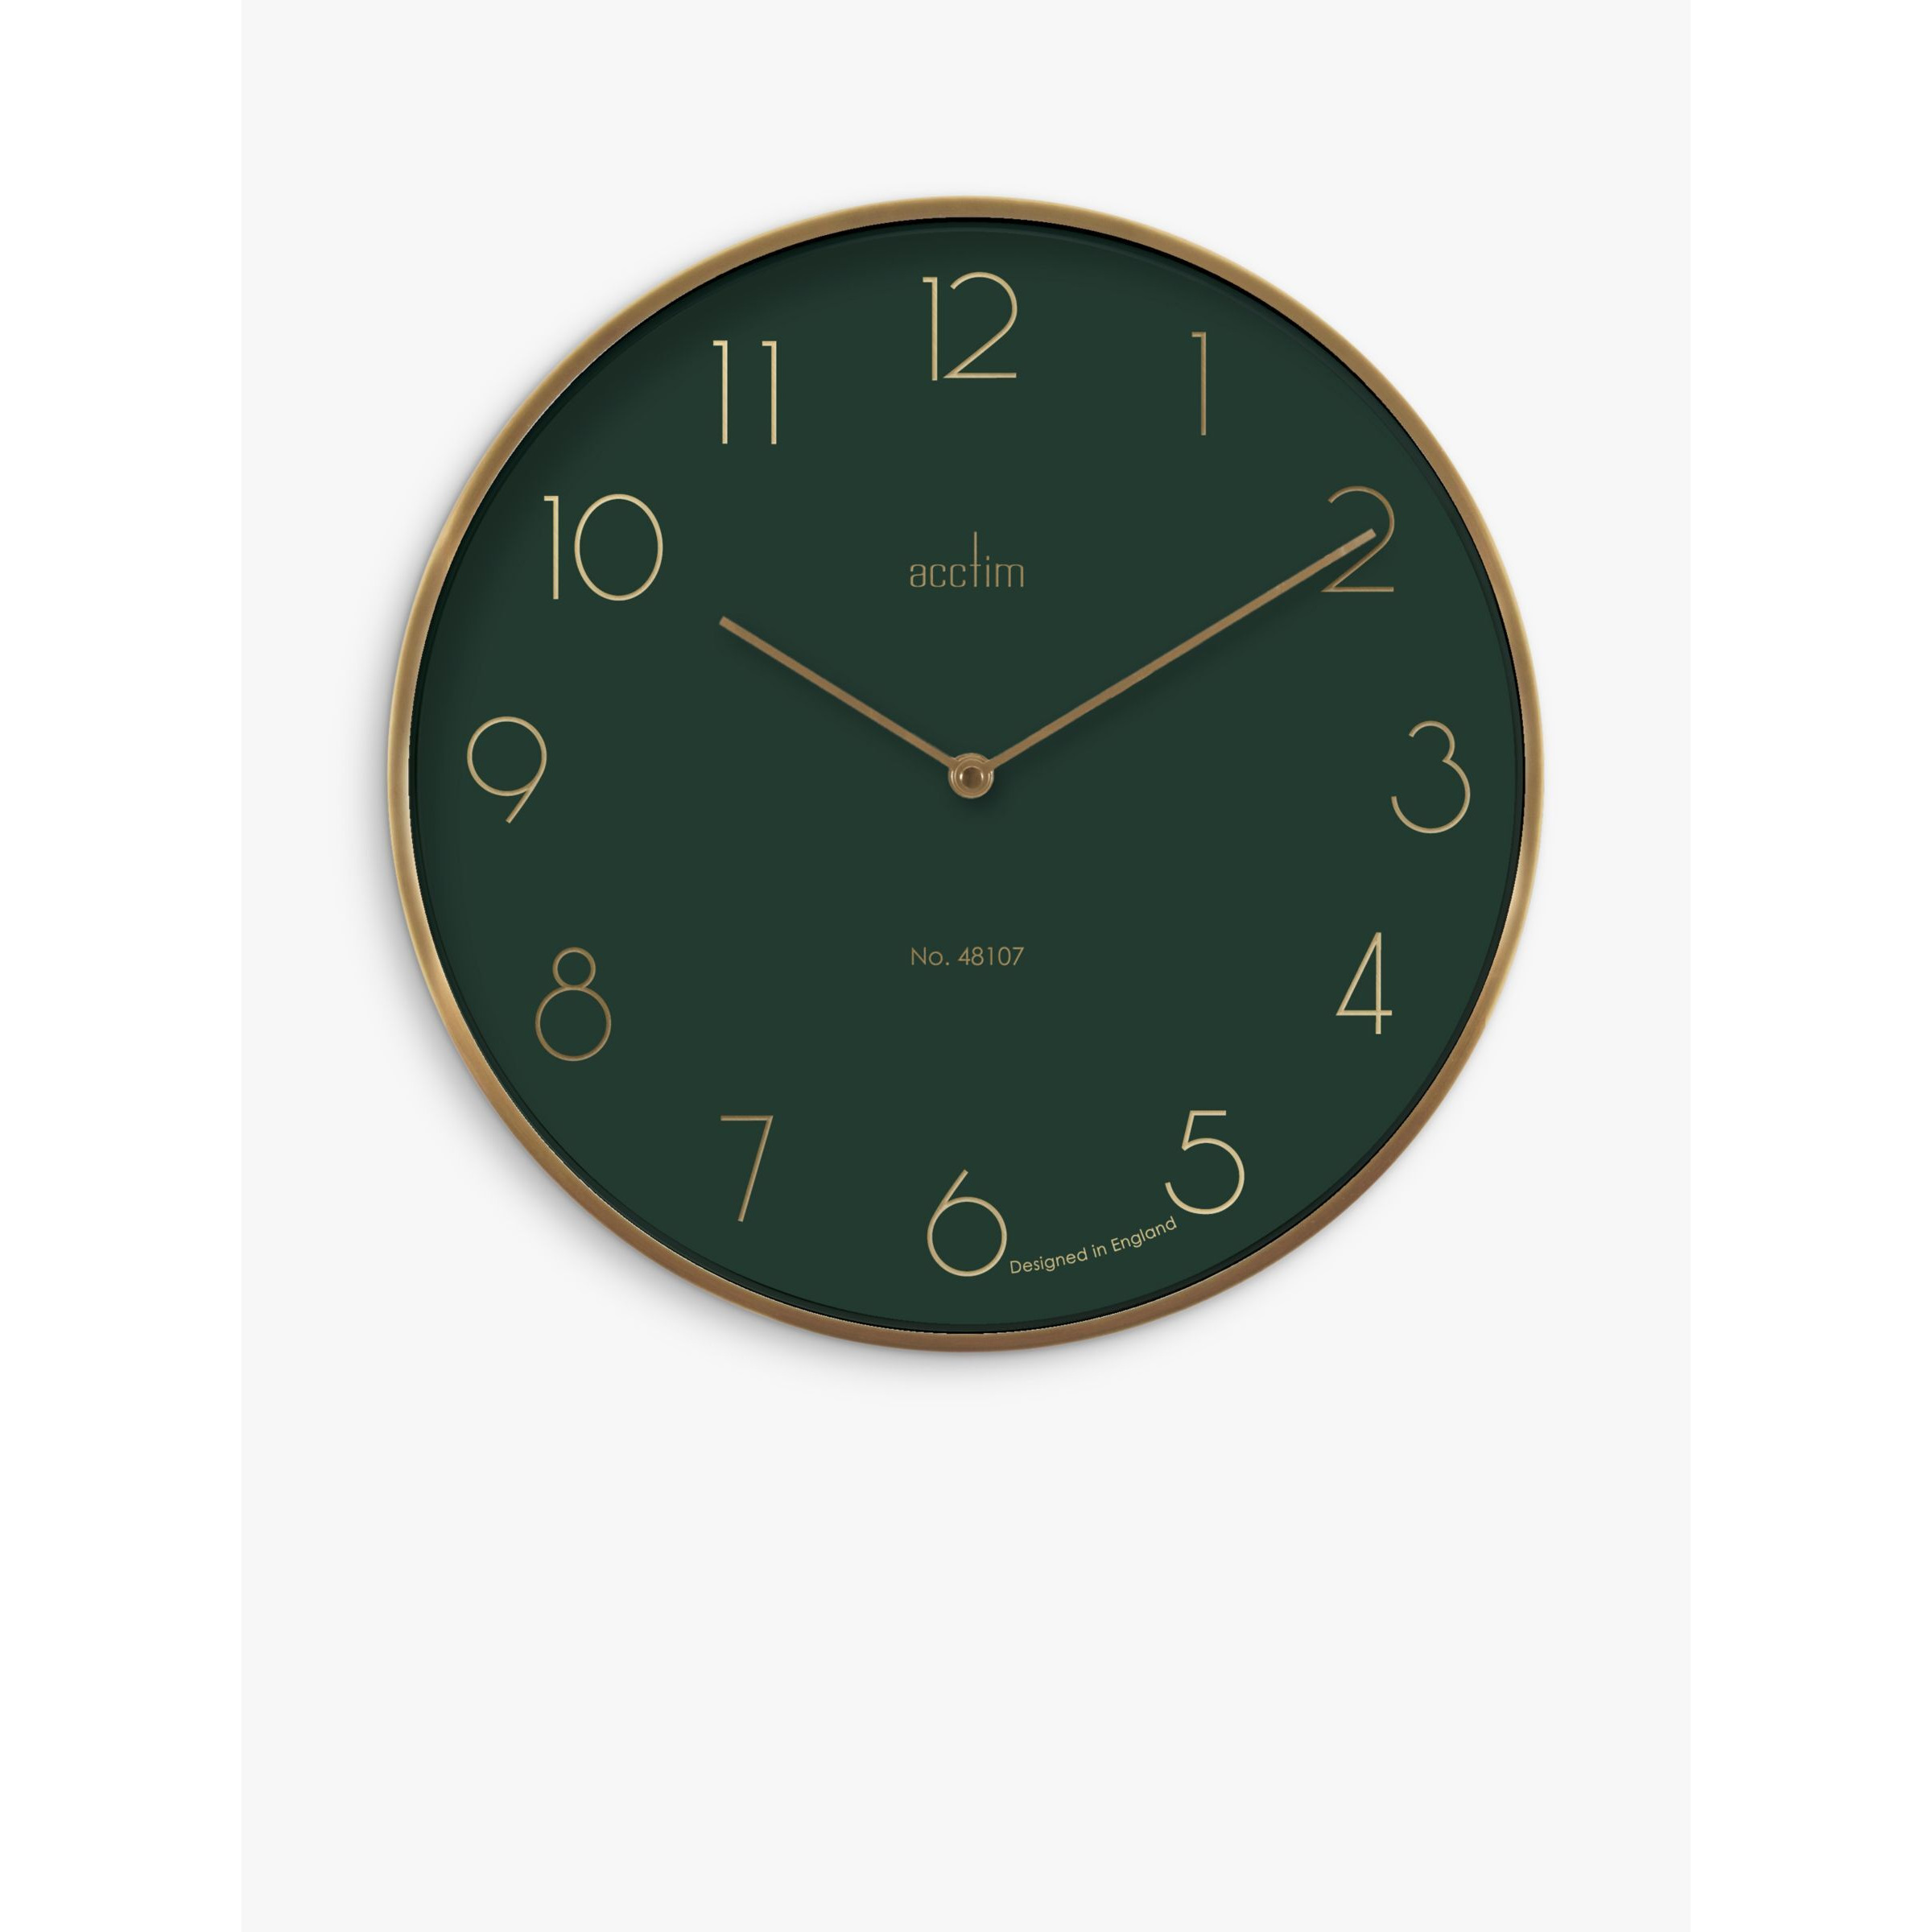 Acctim Madison Analogue Quartz Wall Clock, 35cm, Urban Jungle/Gold - image 1